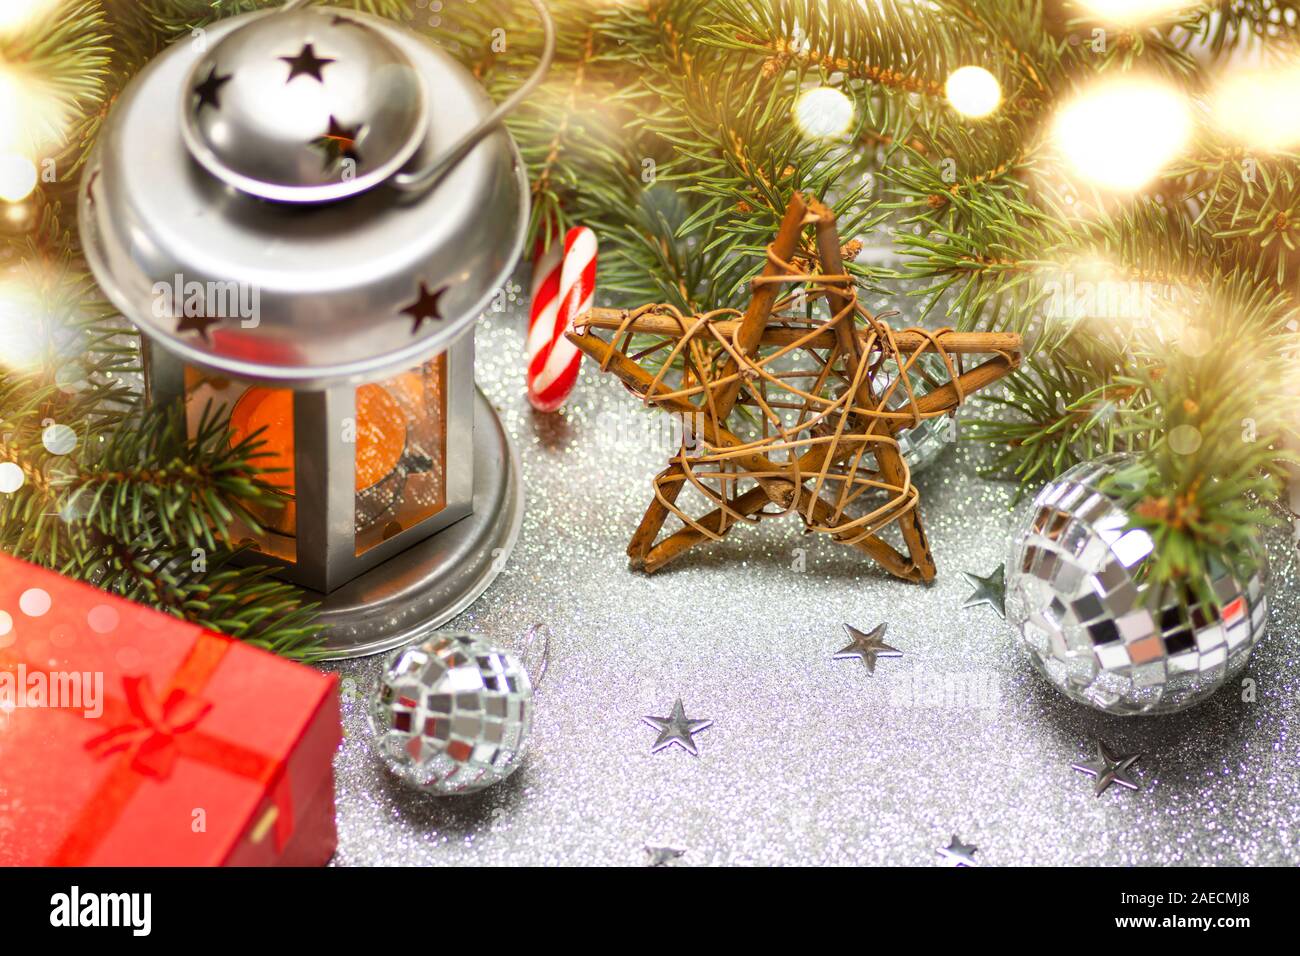 Festive lantern and Christmas decorations against shiny background Stock Photo